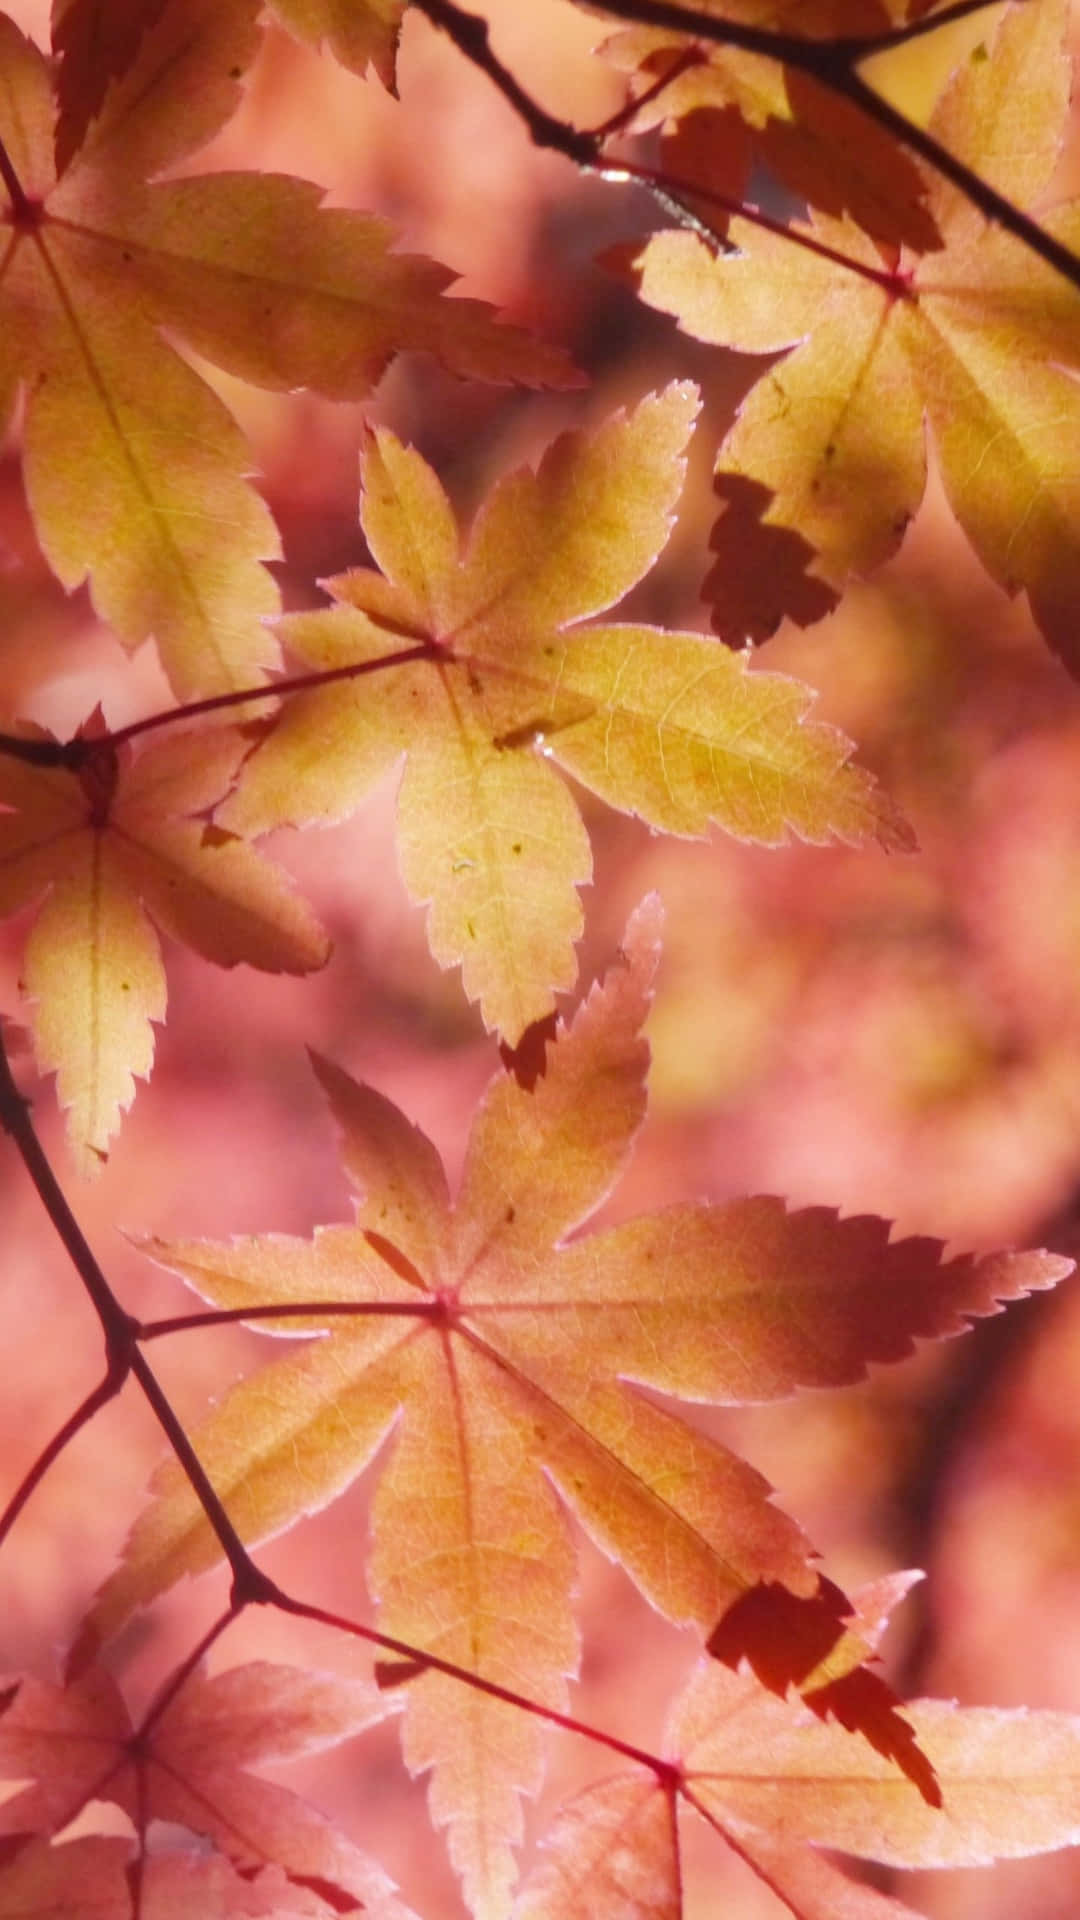 Autumn Leaves Telefon 1440 X 2560 Wallpaper